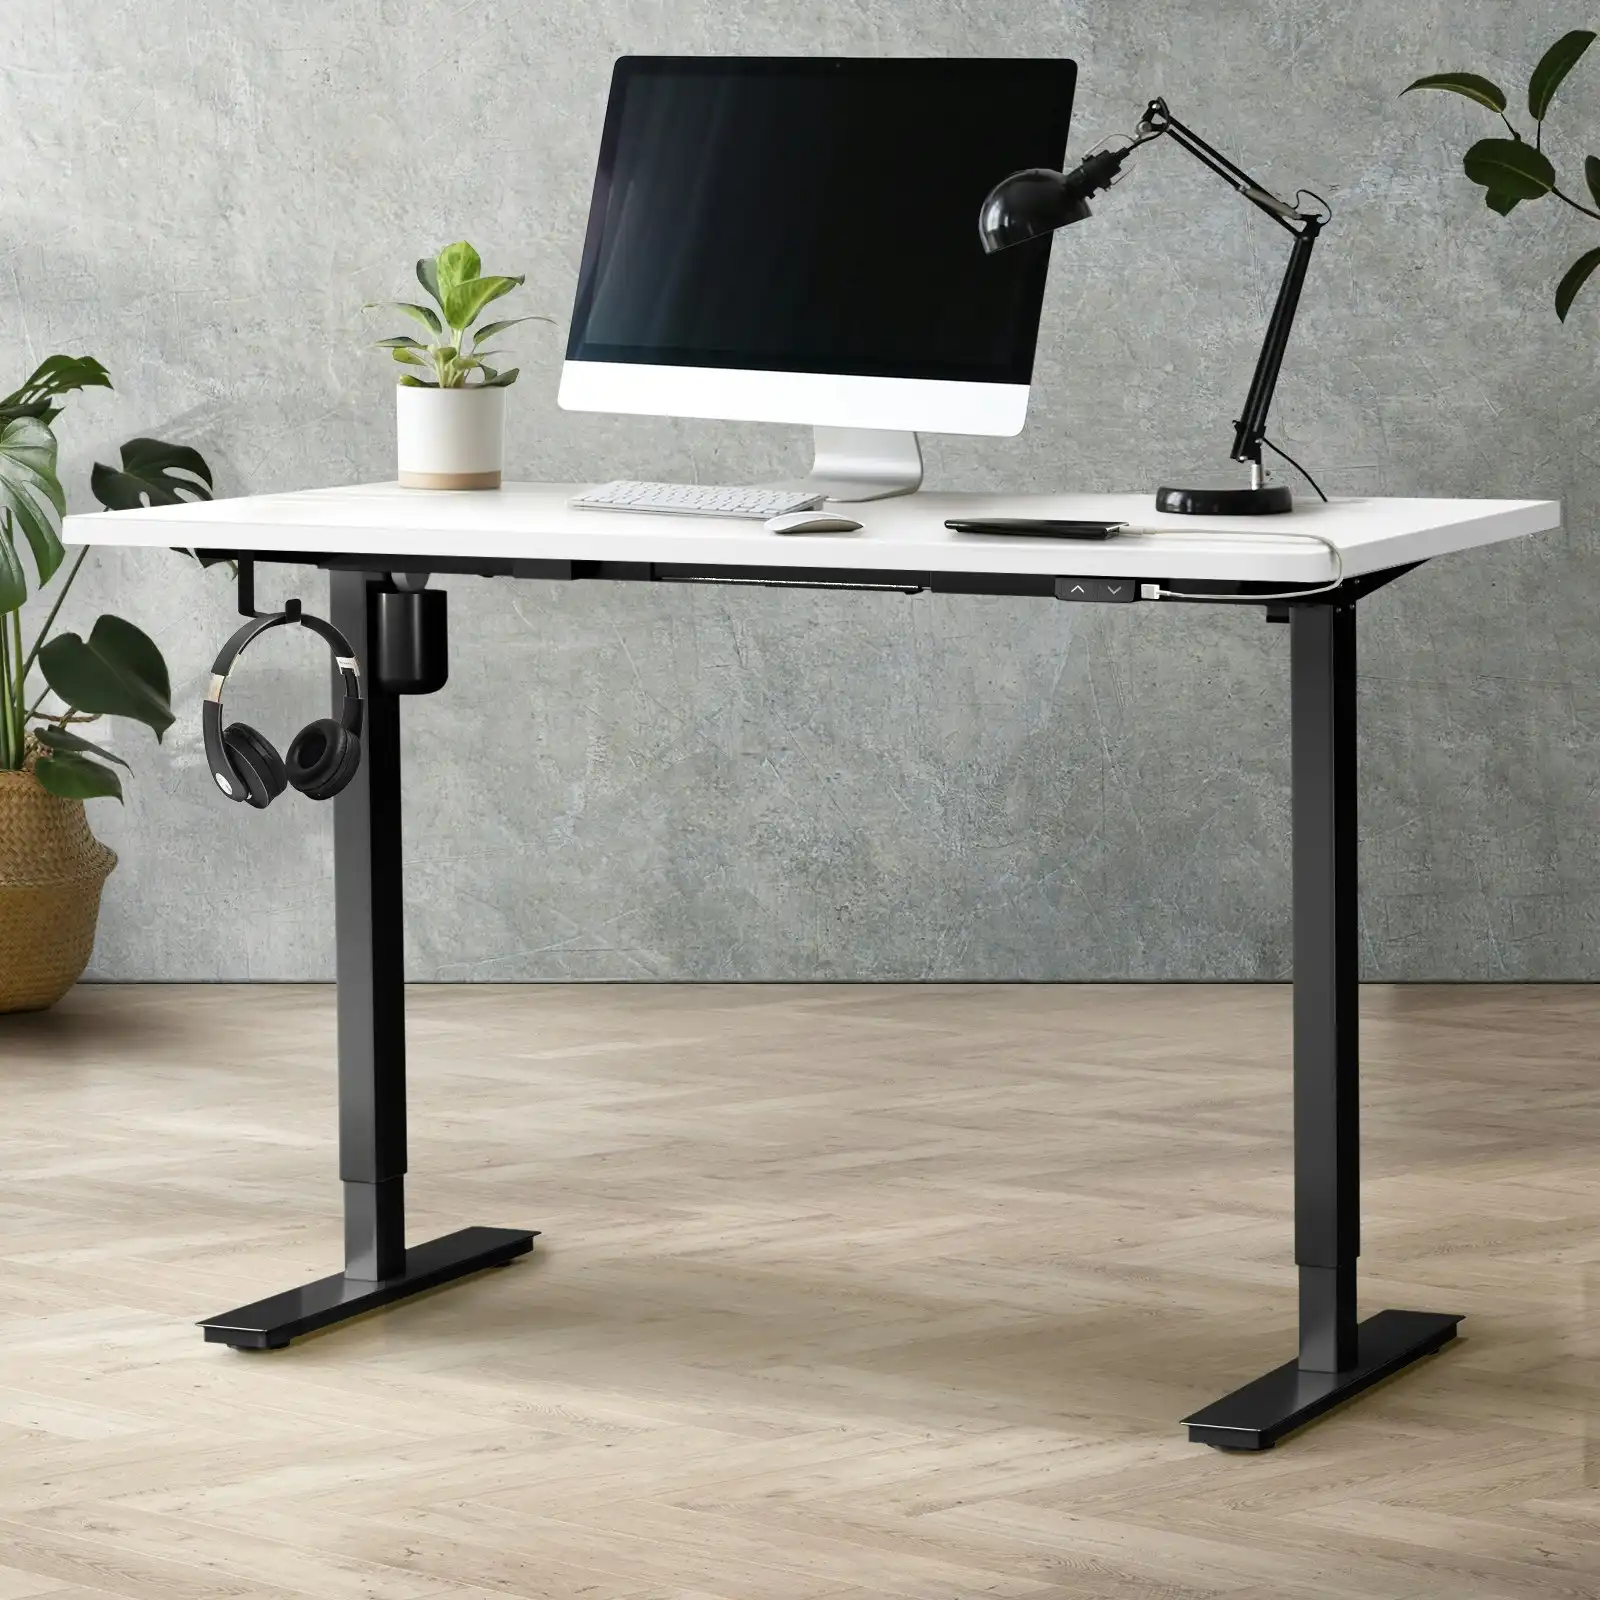 Oikiture 150cm Electric Standing Desk Single Motor Black Frame White Desktop